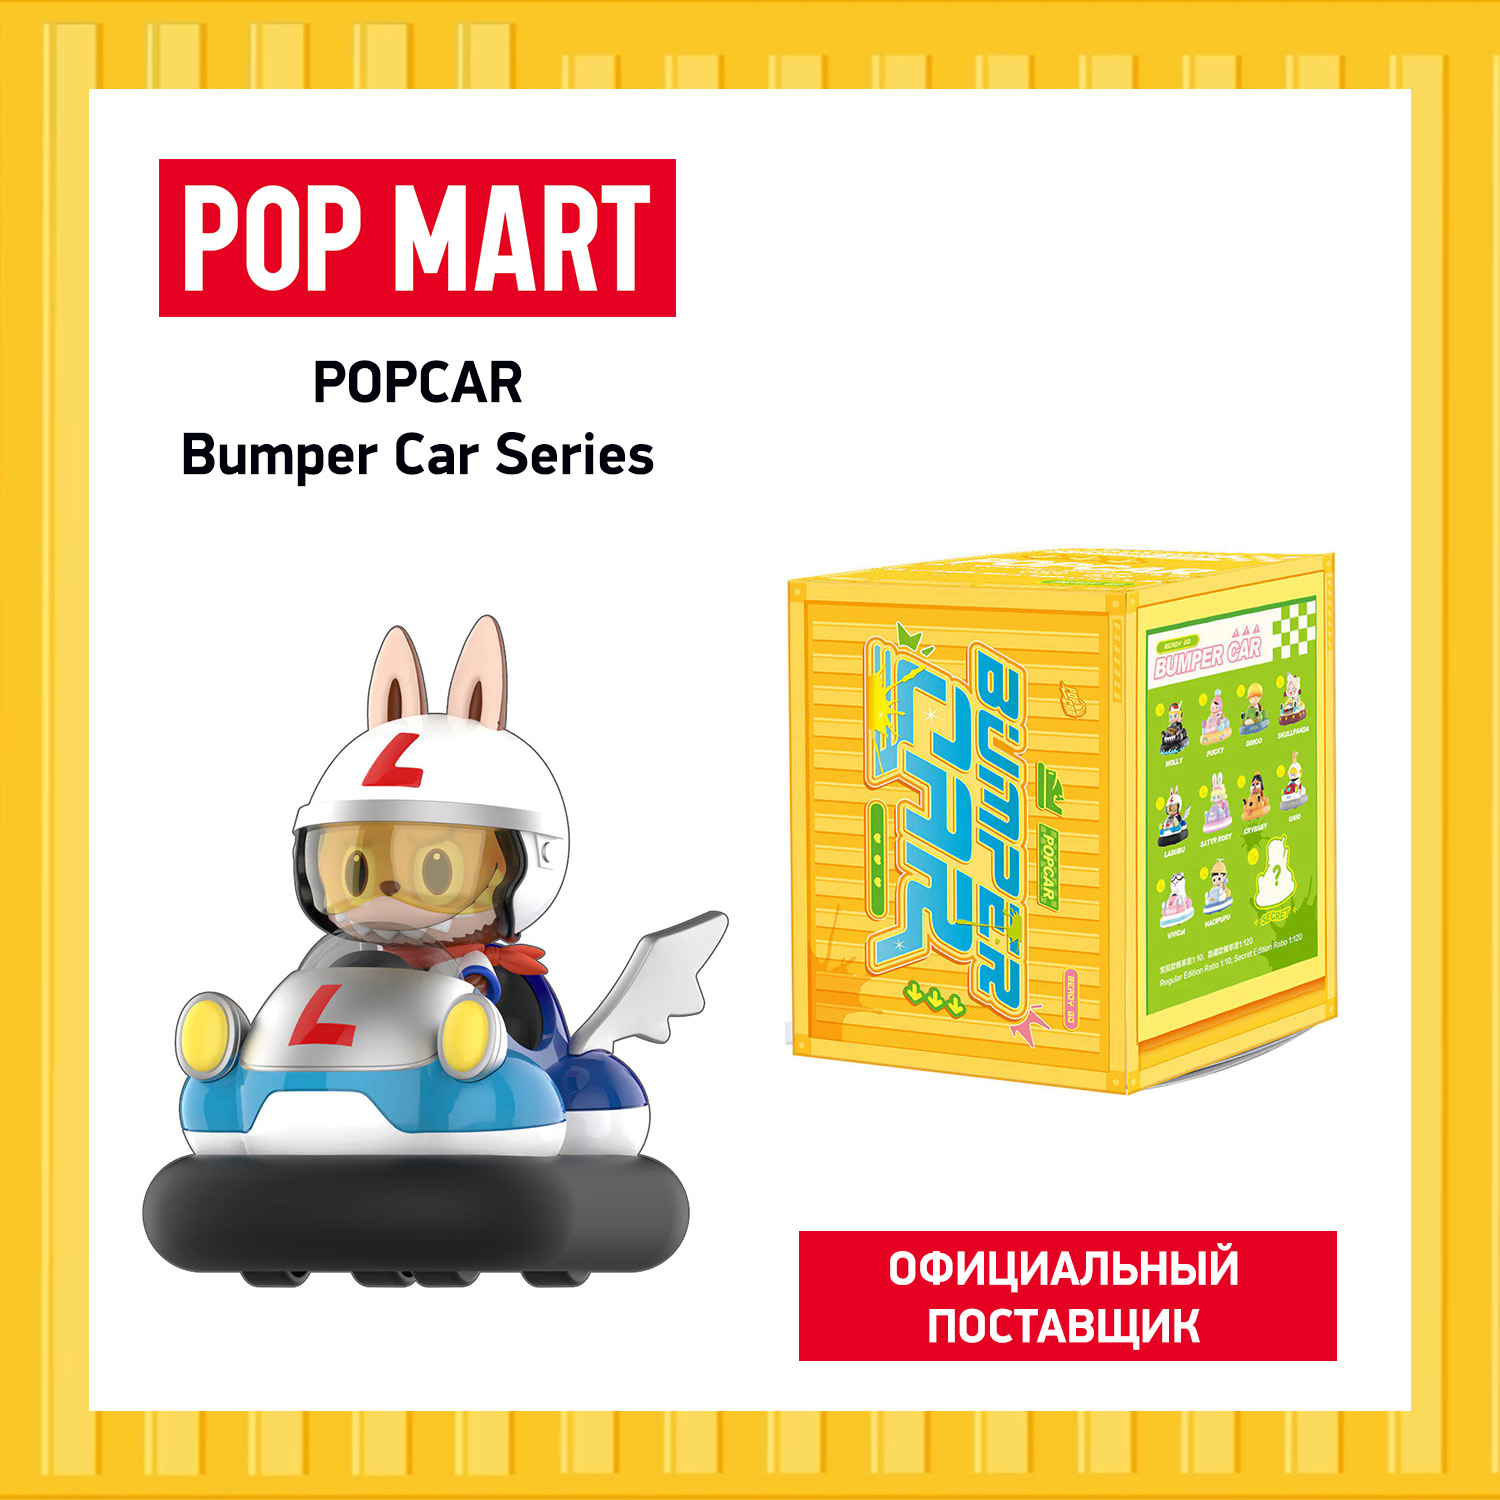 Коллекционная фигурка Pop Mart Popcar Bumper Car фигурка pop mart molly magic mint car 15см pm63208